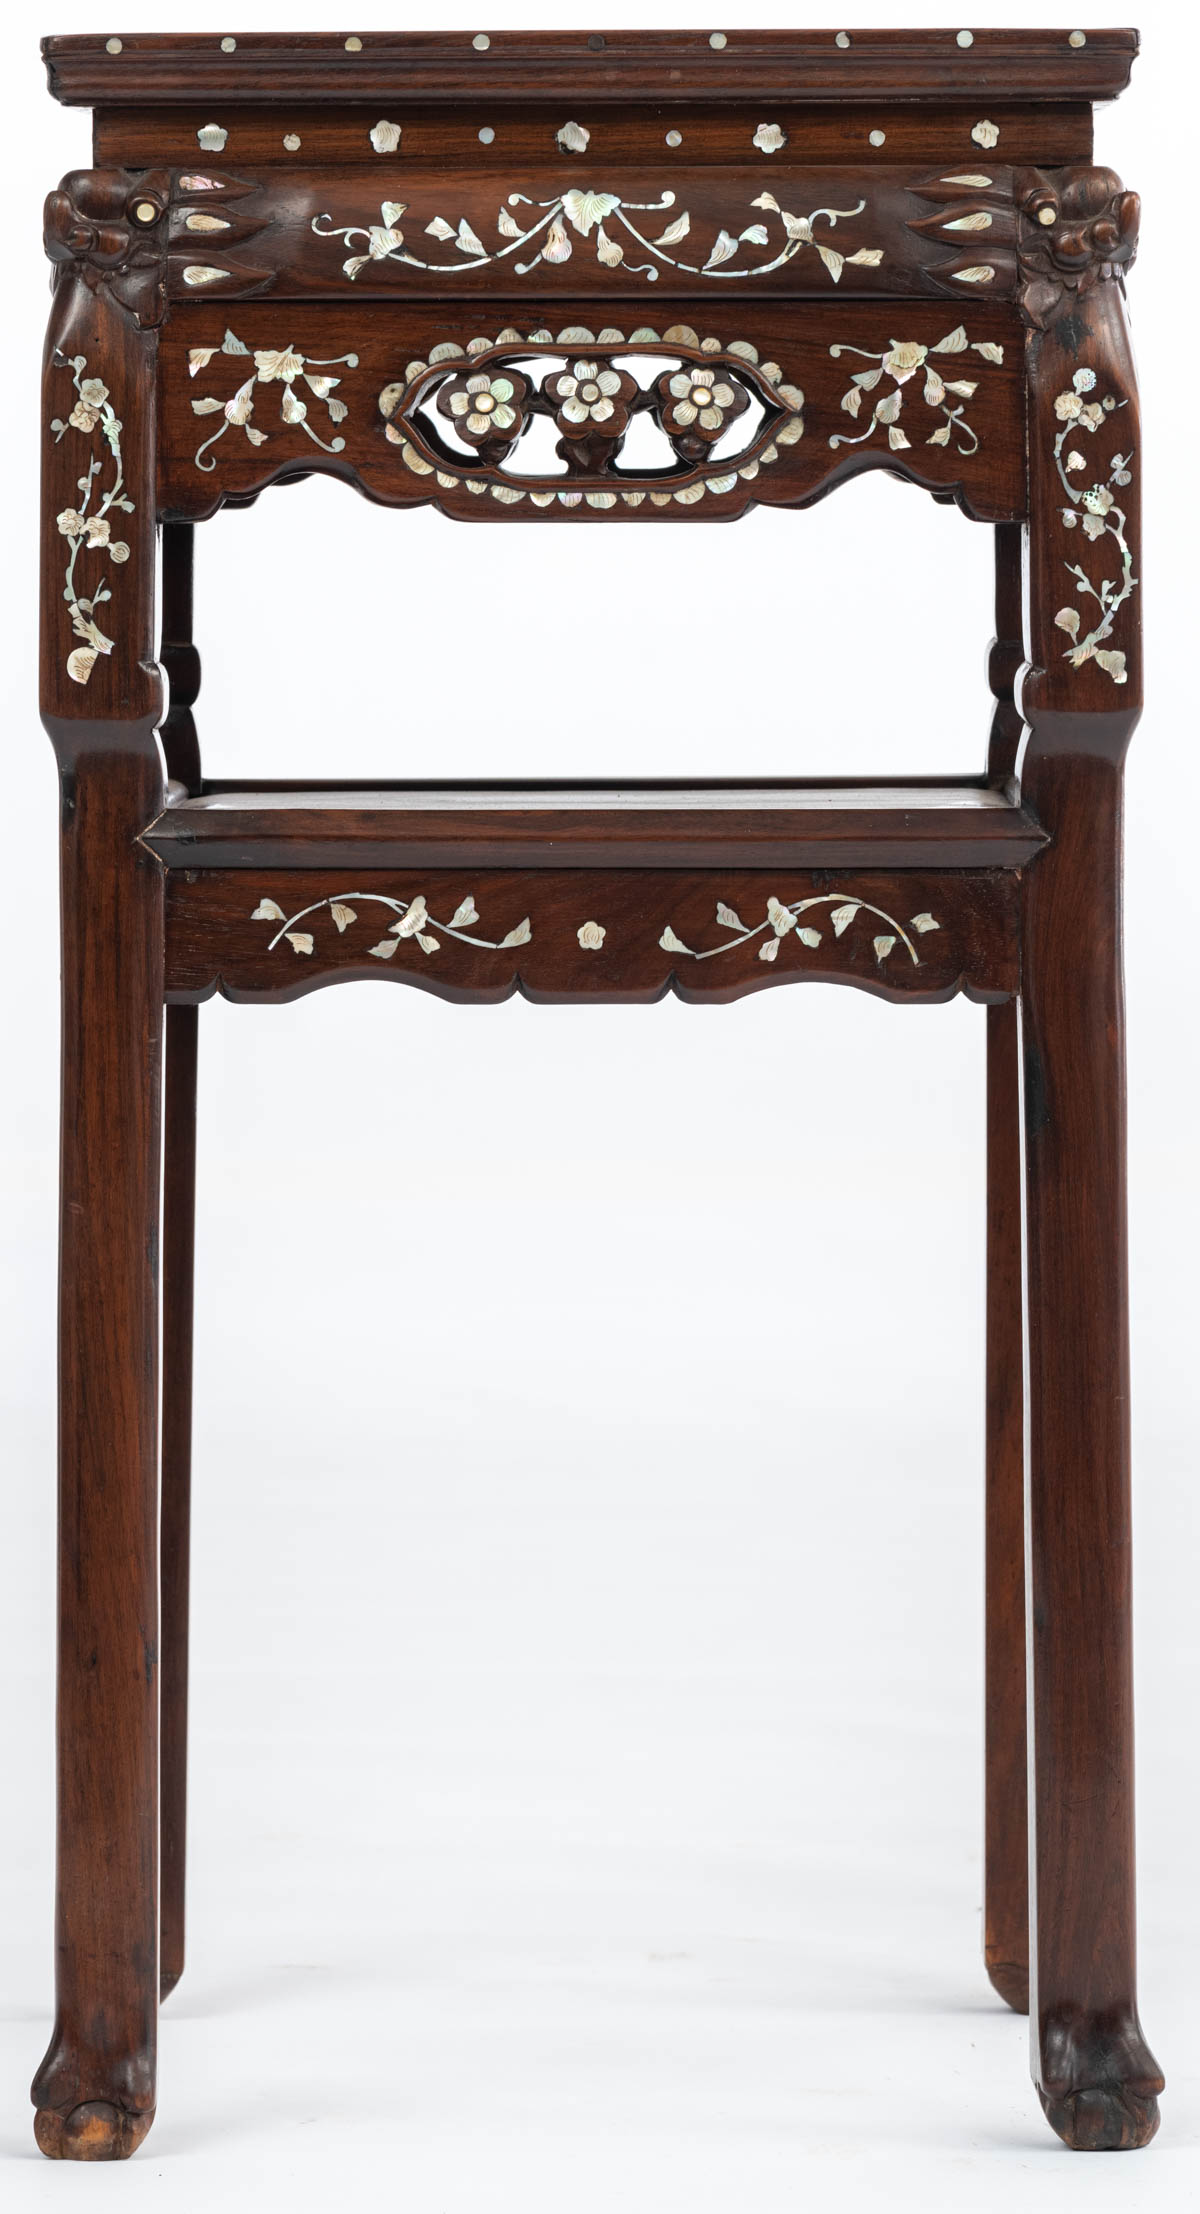 A Chinese exotic hardwood furniture set - Image 10 of 16